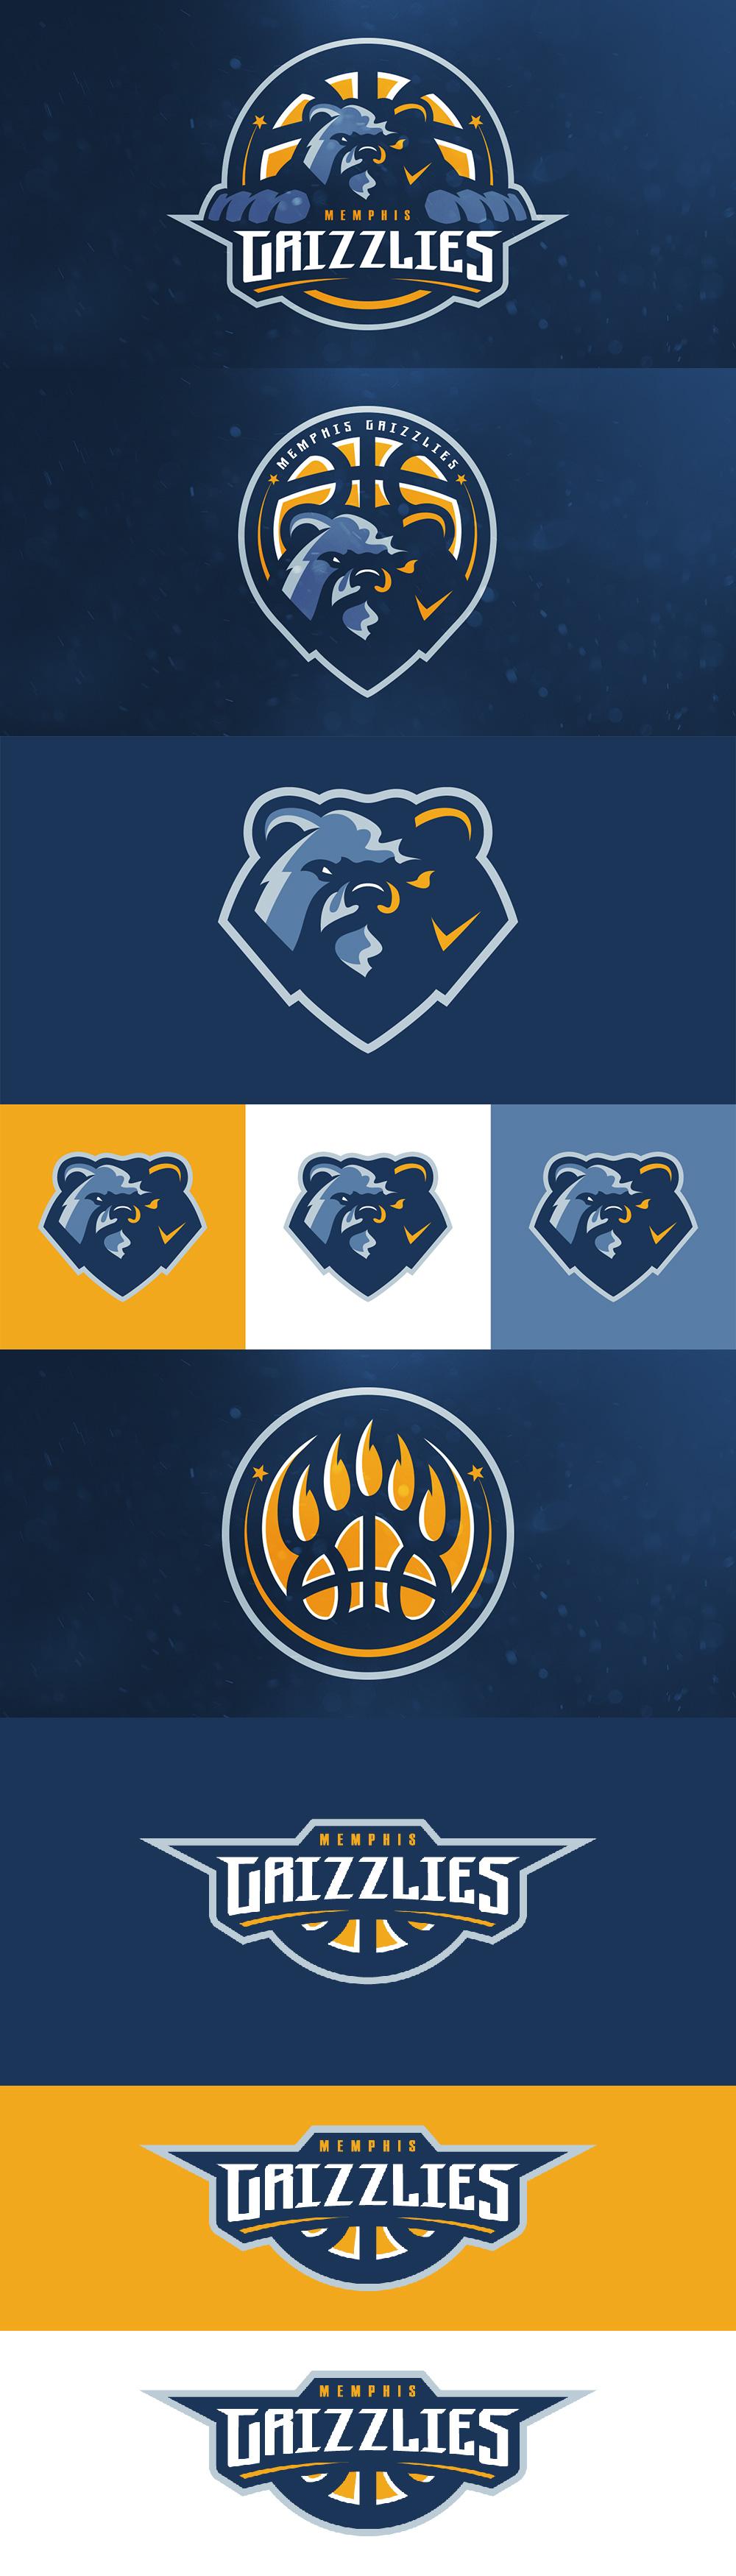 Team Concept Logo - Awesome Basketball Team Logo and Identity Designs